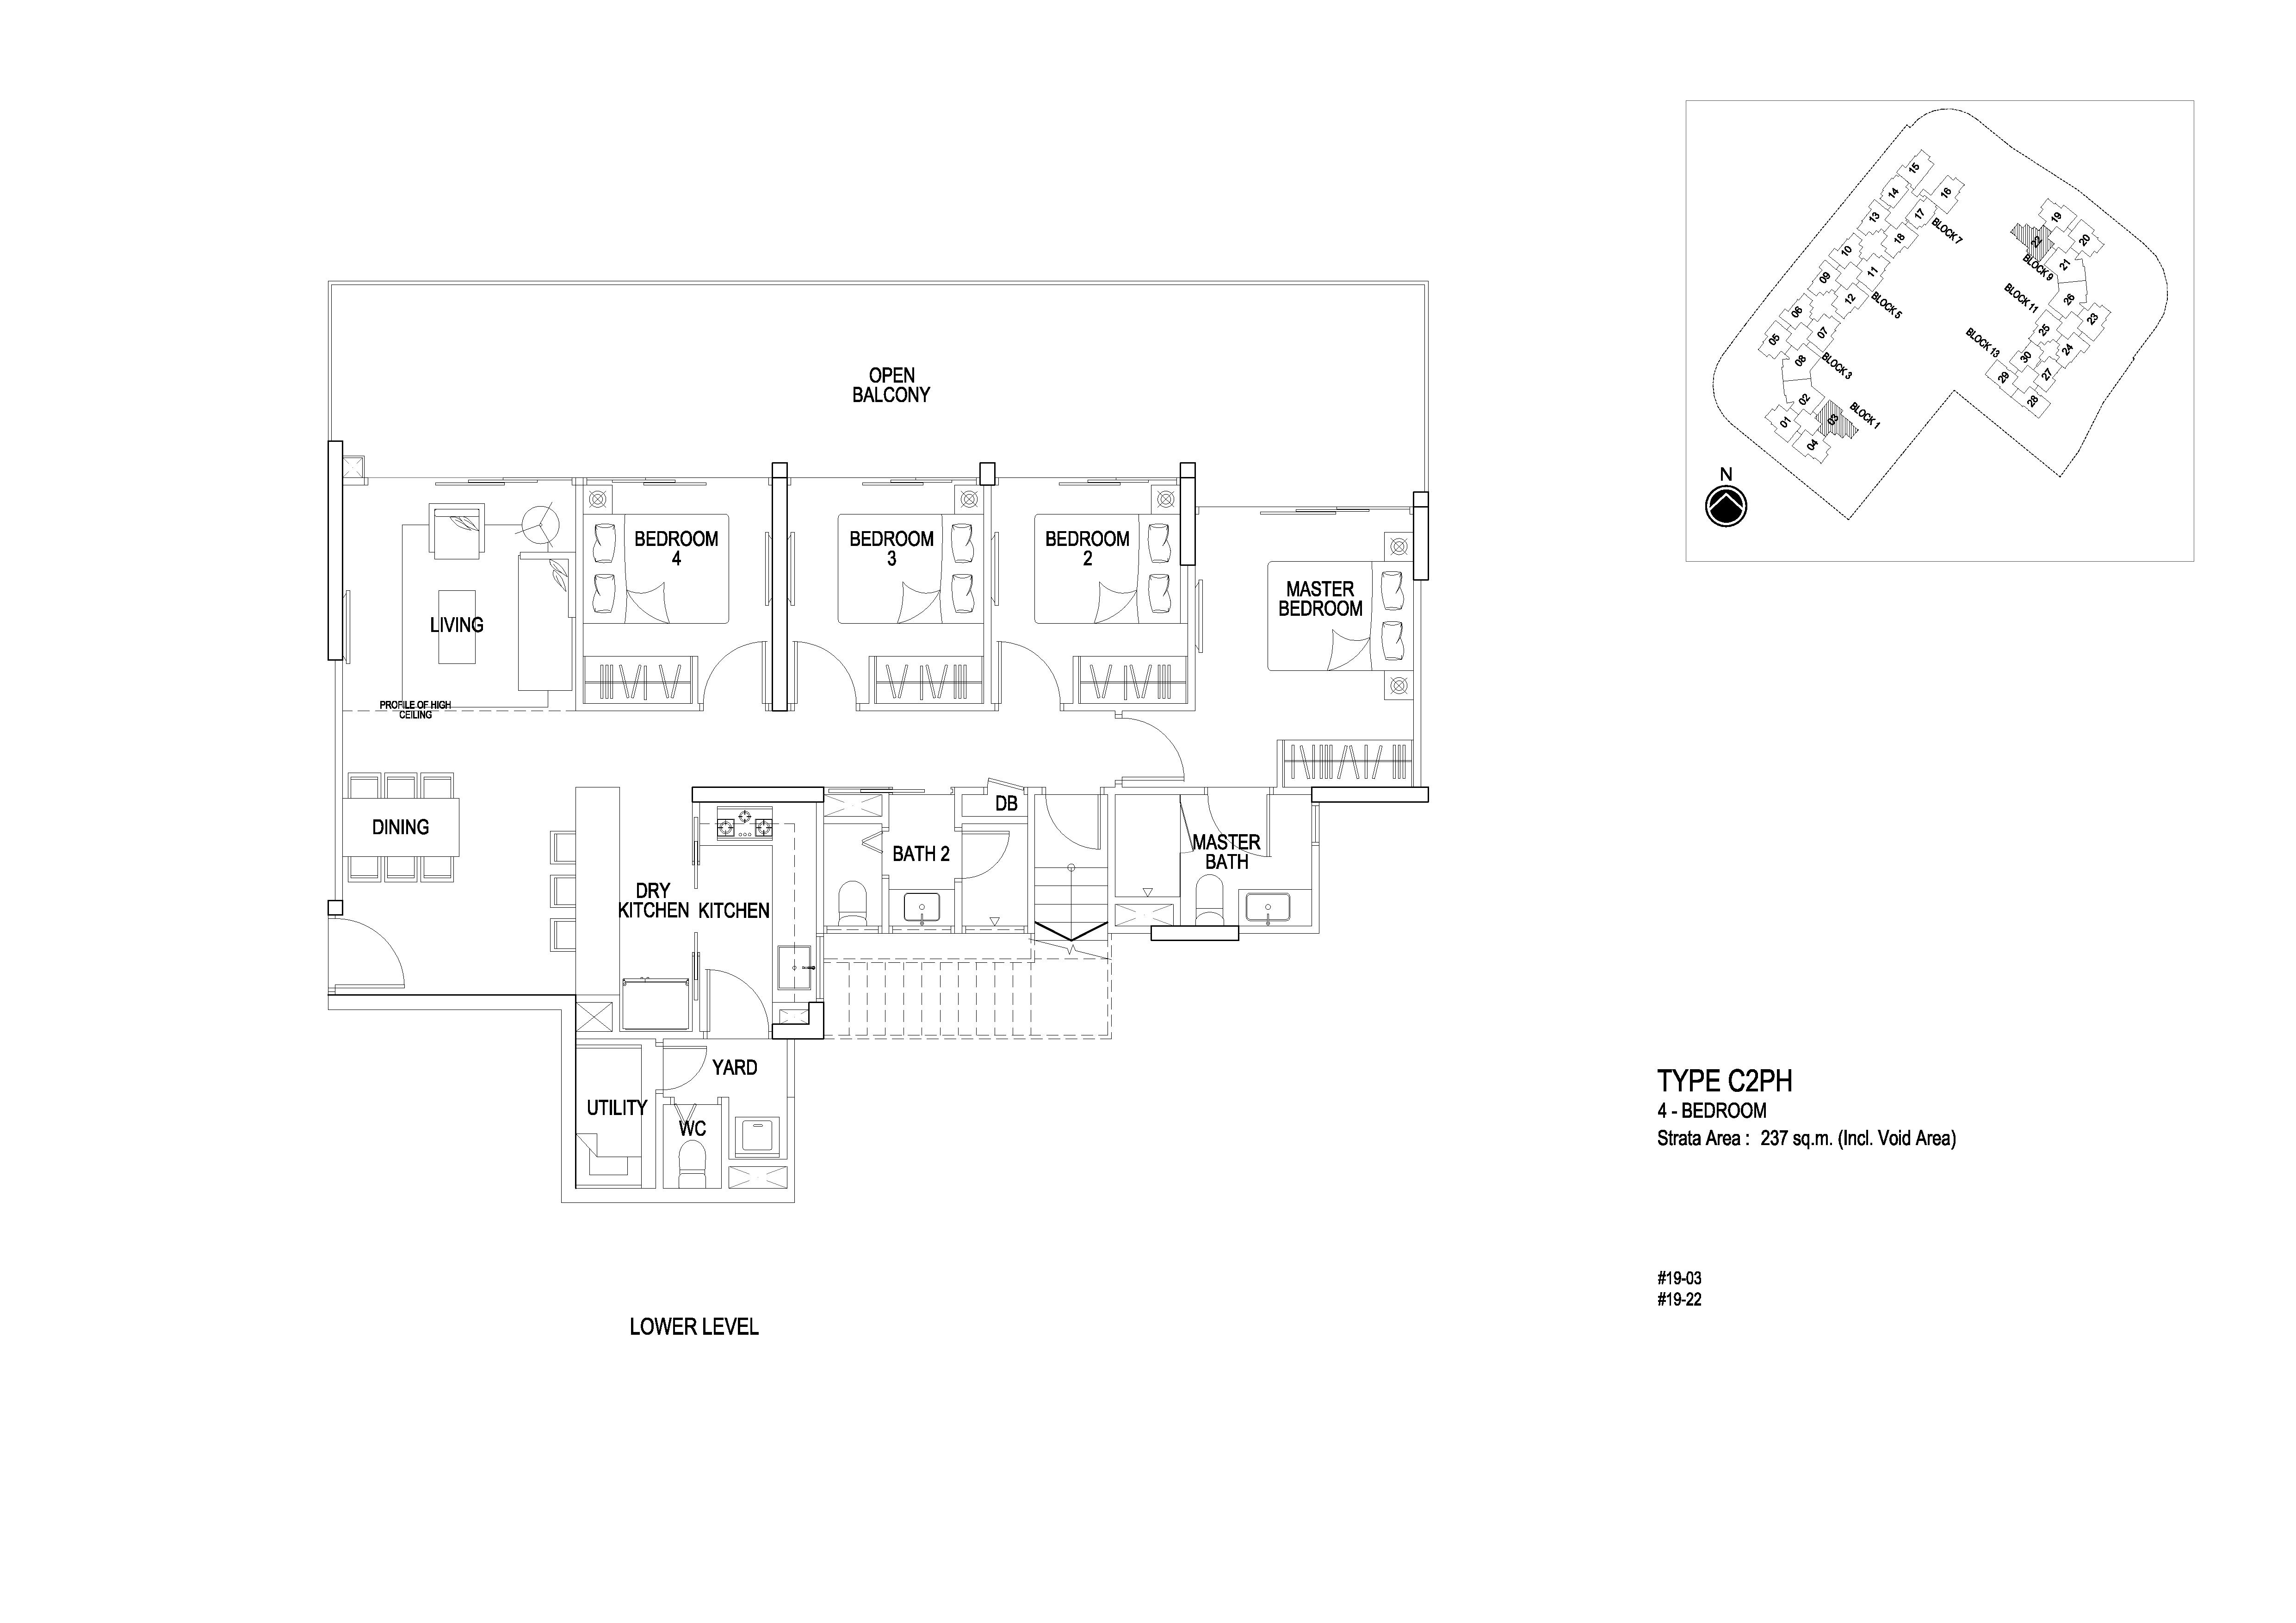 Flo Residence 4 Bedroom Penthouse Floor Plans Type C2PH (Lower Level)